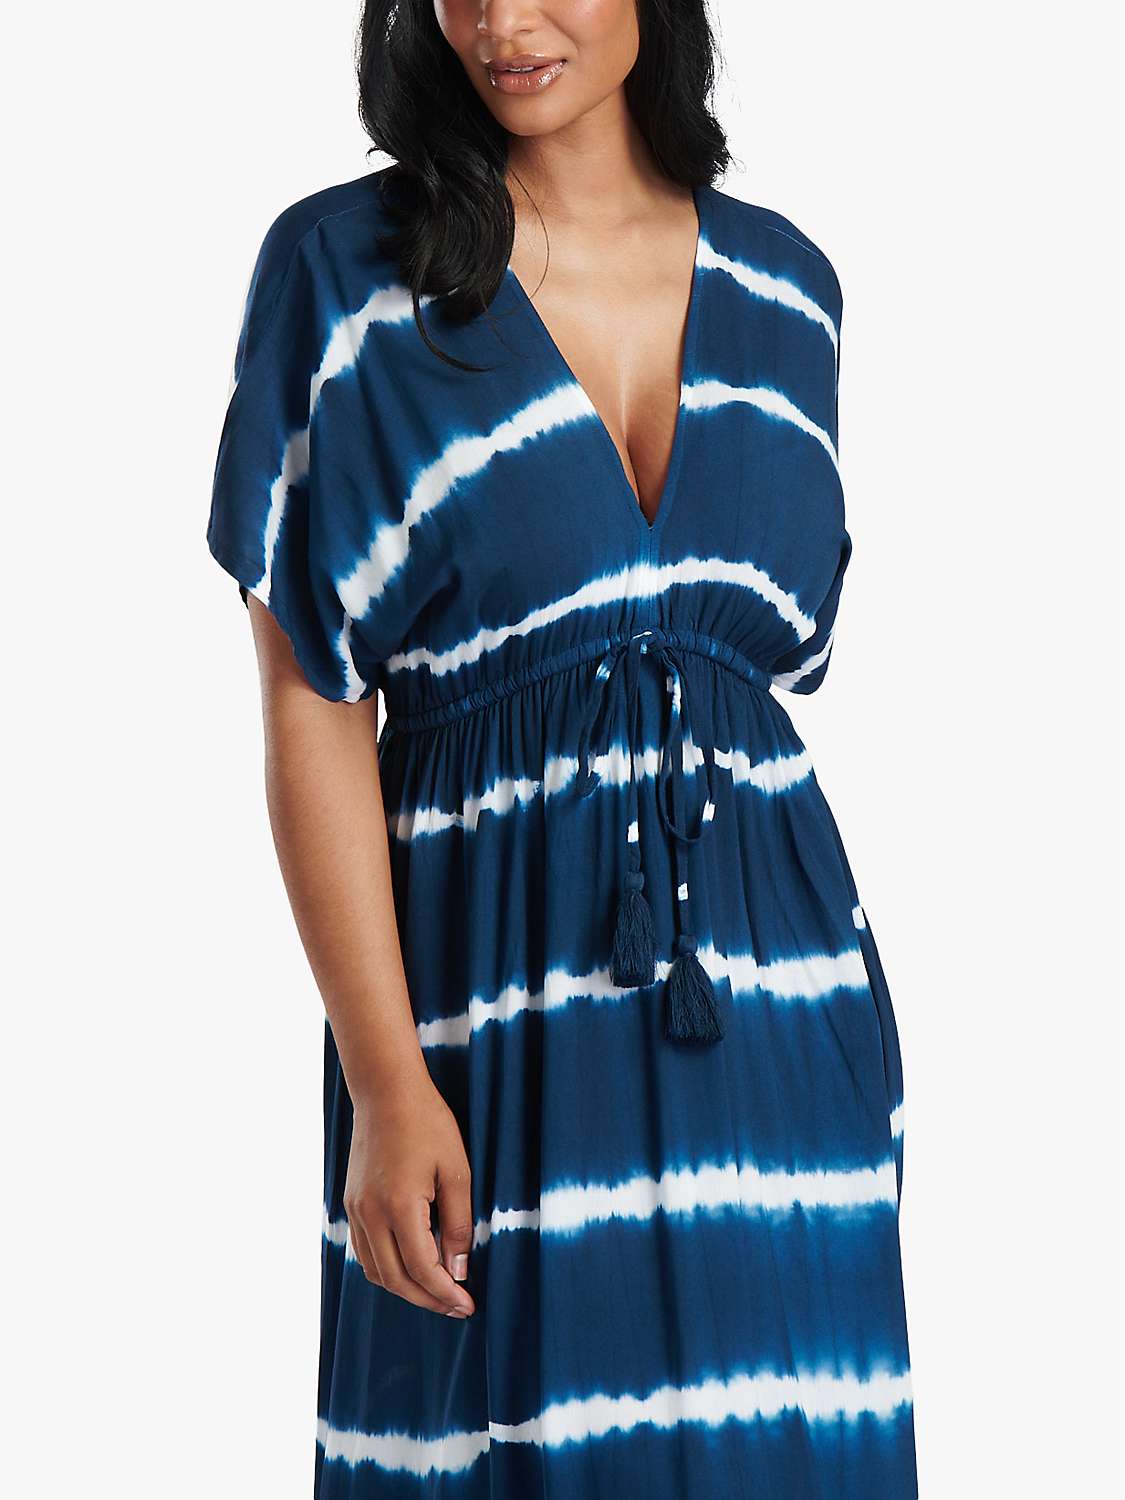 Buy South Beach V-Neck Tie Dye Maxi Dress, Navy/White Online at johnlewis.com